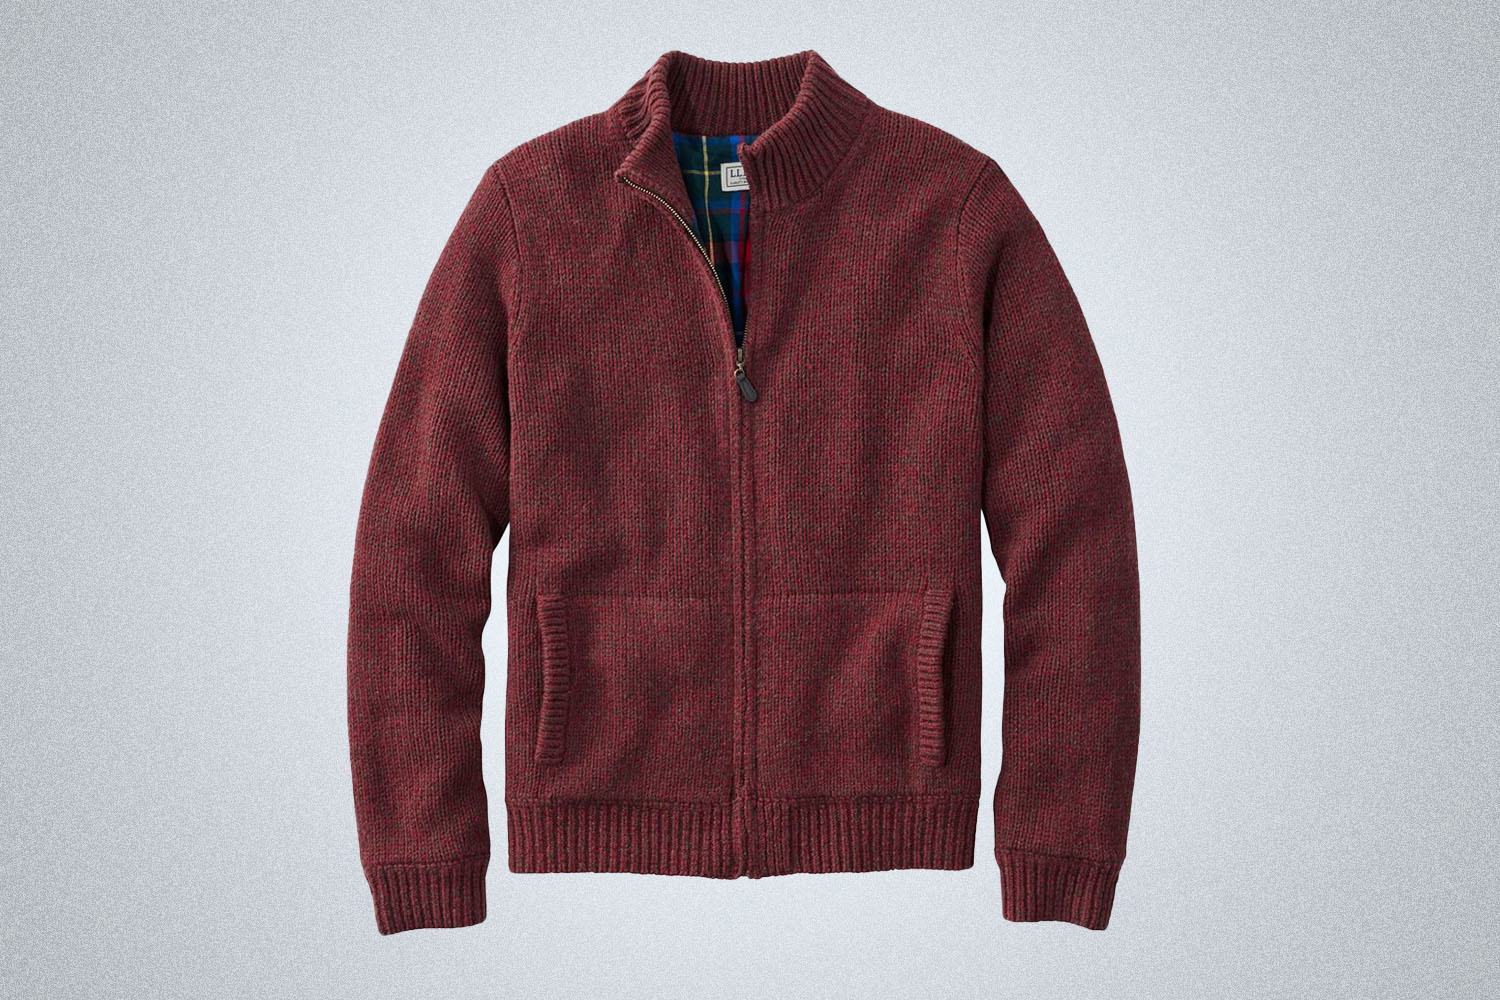 a maroon zip sweater